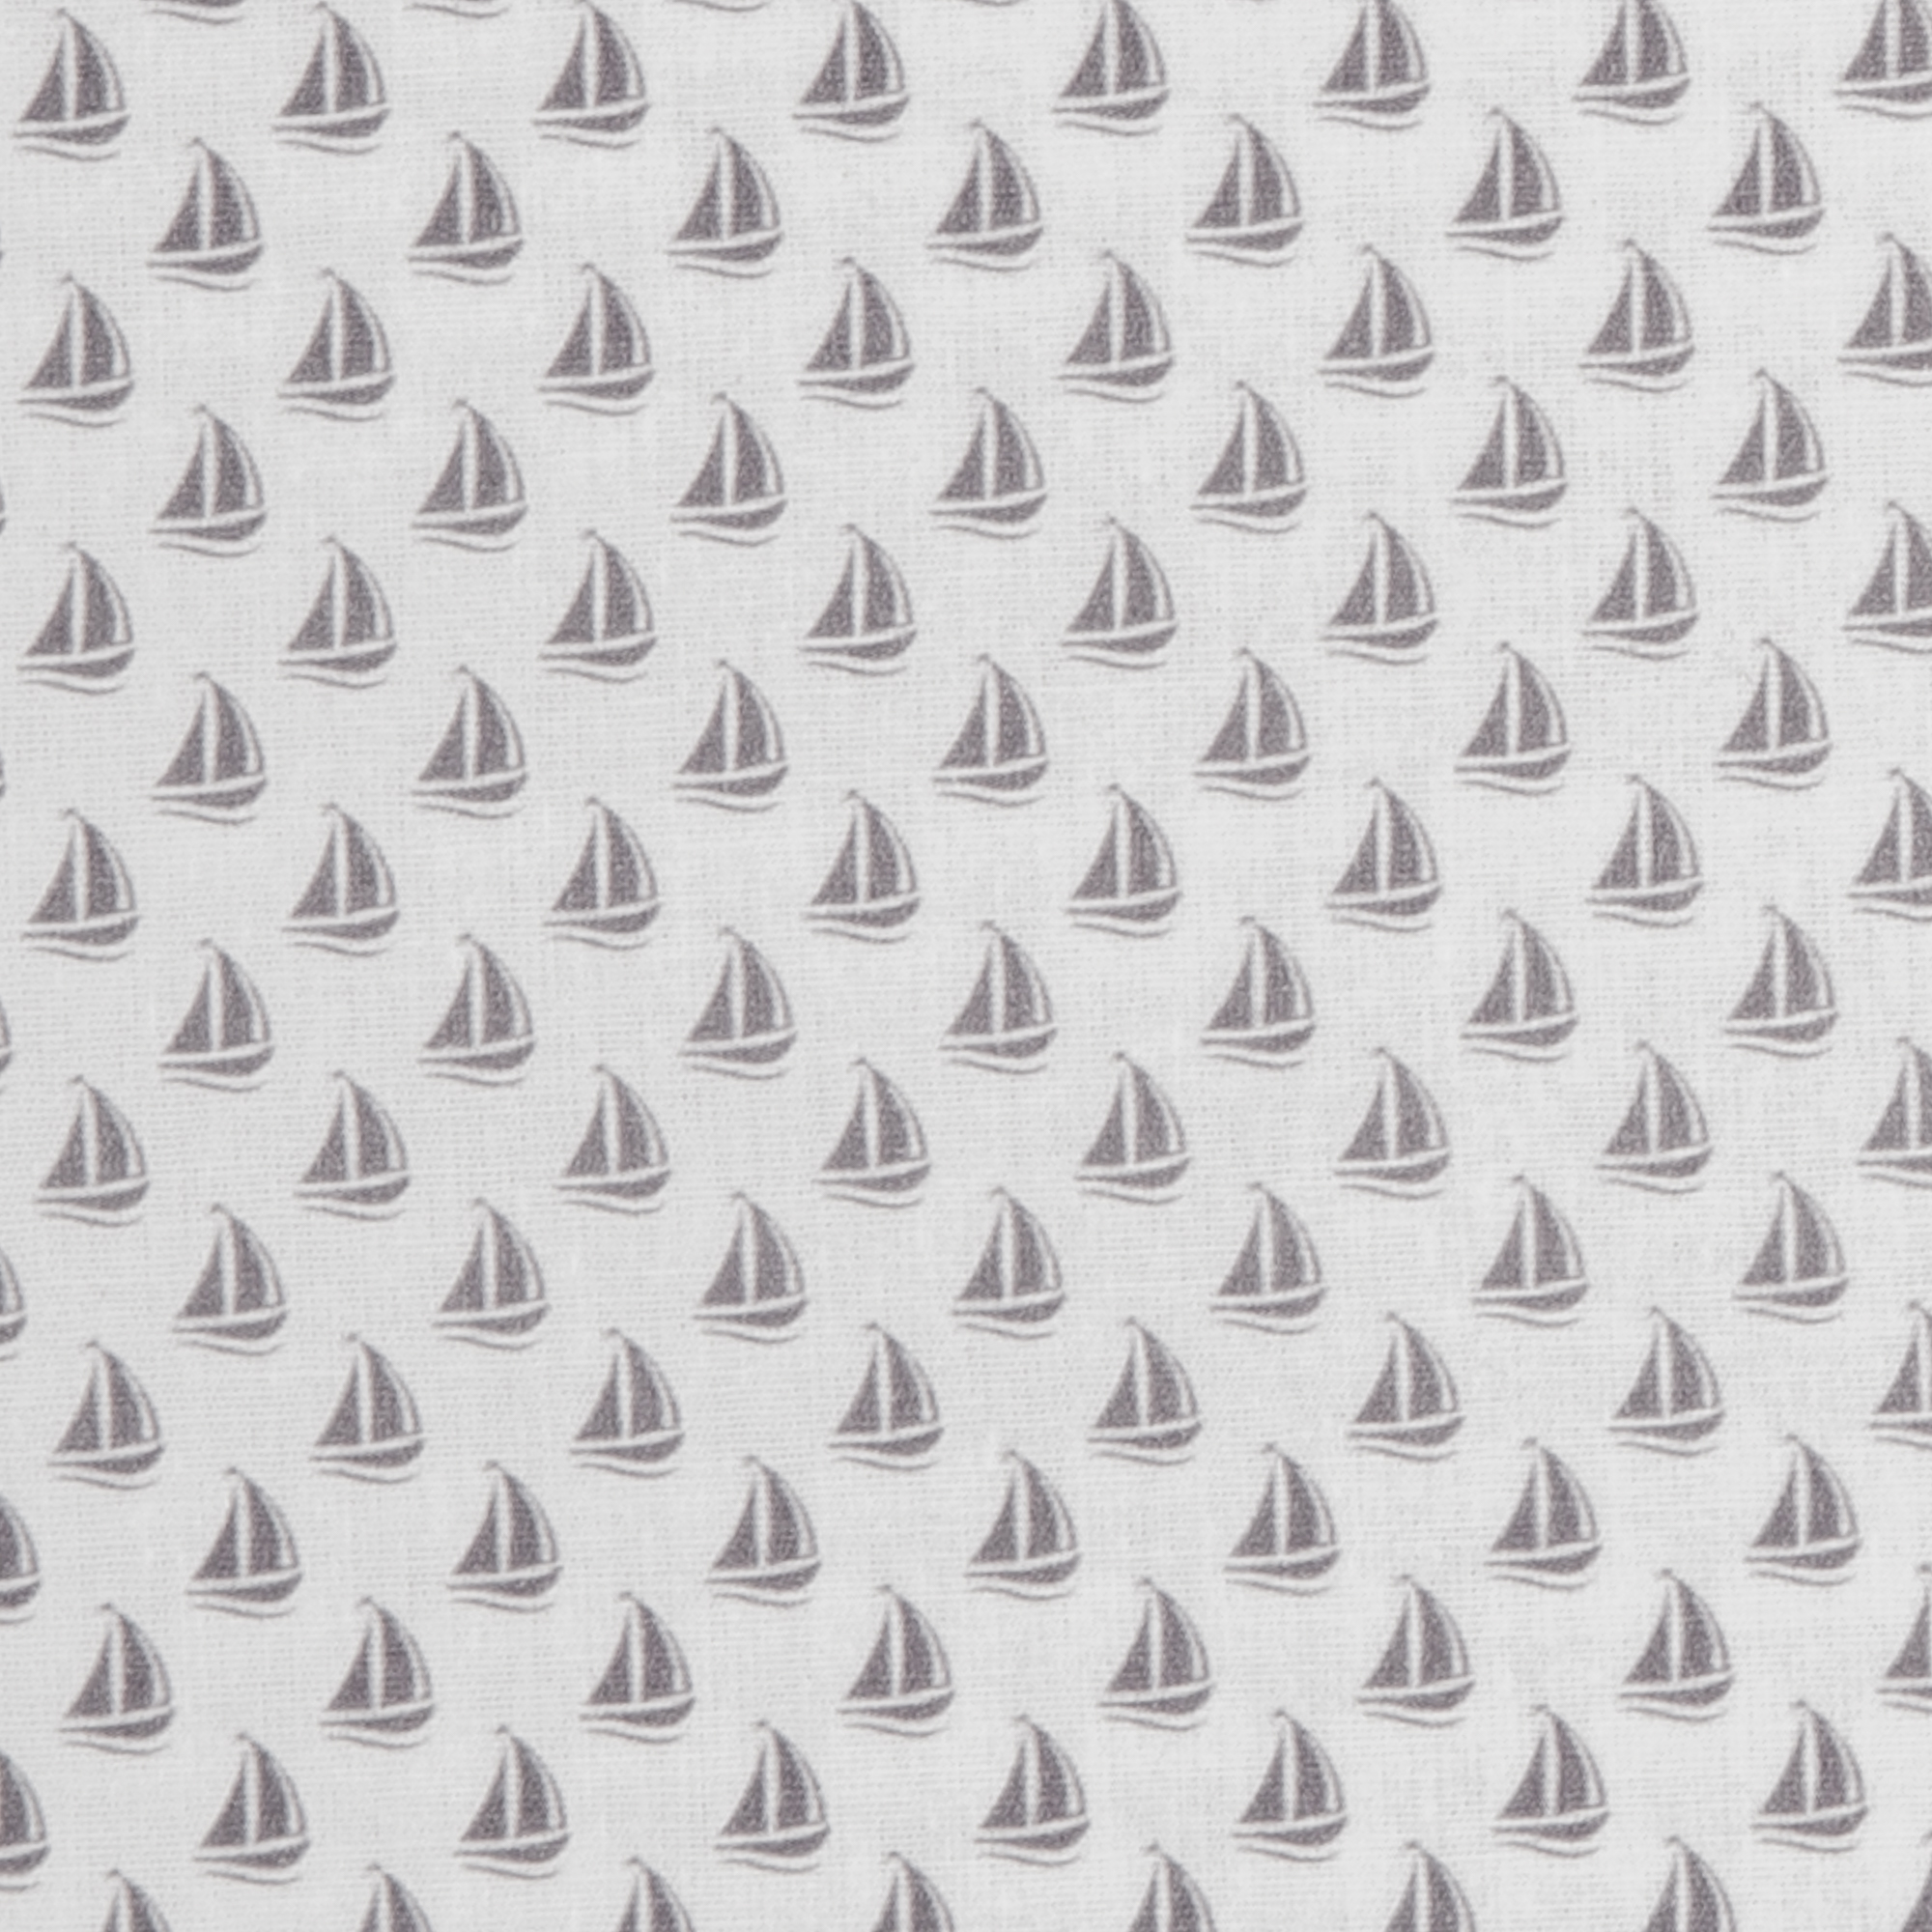 Maritime - Sailboats - white-gray